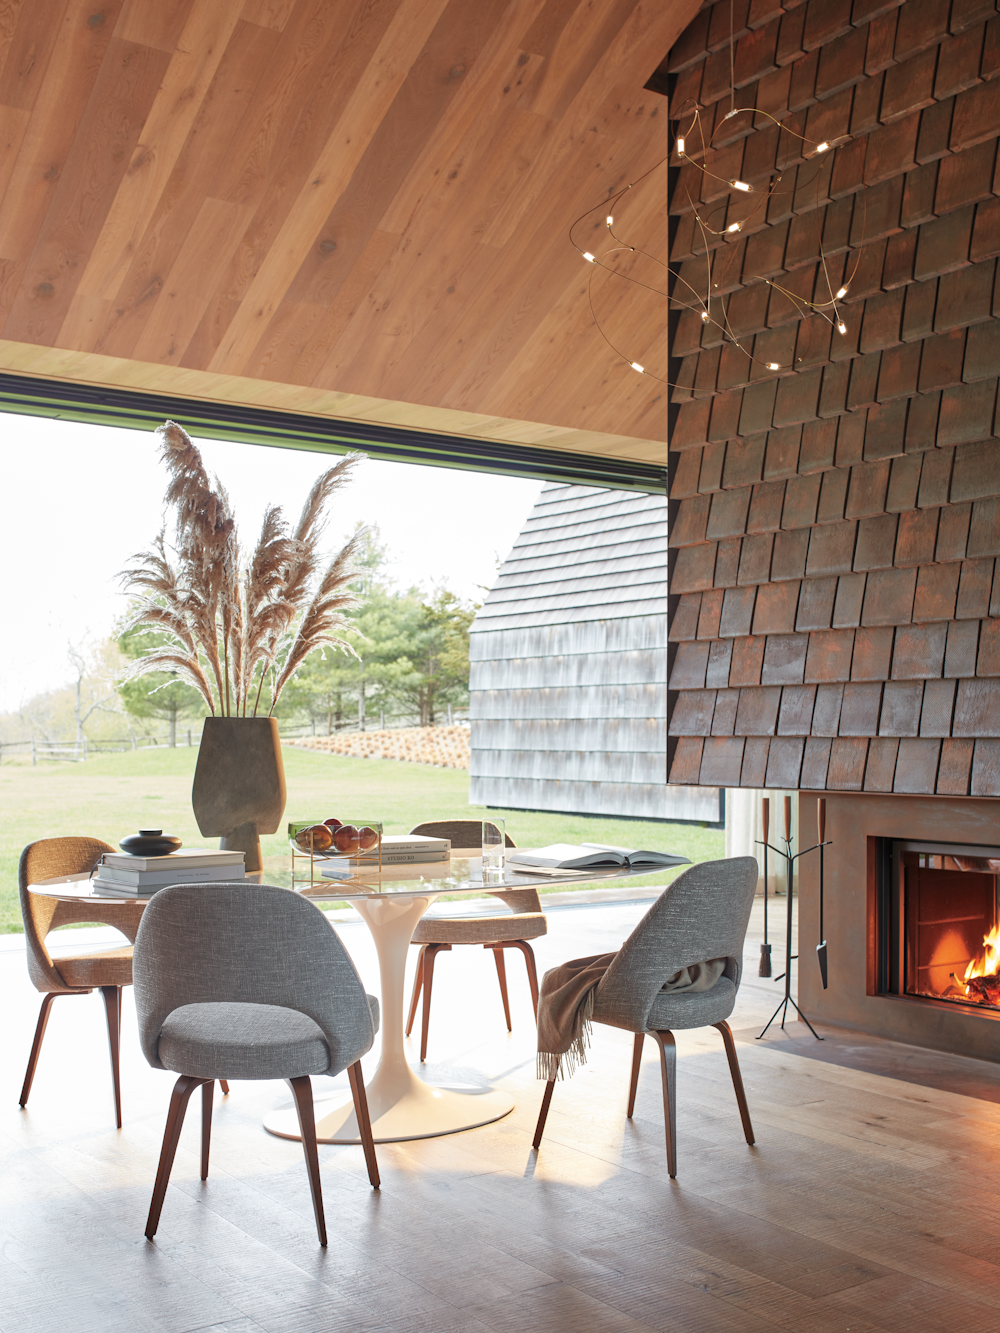 Saarinen Oval Dining with Saarinen Executive Chairs in outdoor/indoor dining room with pendant dimmed